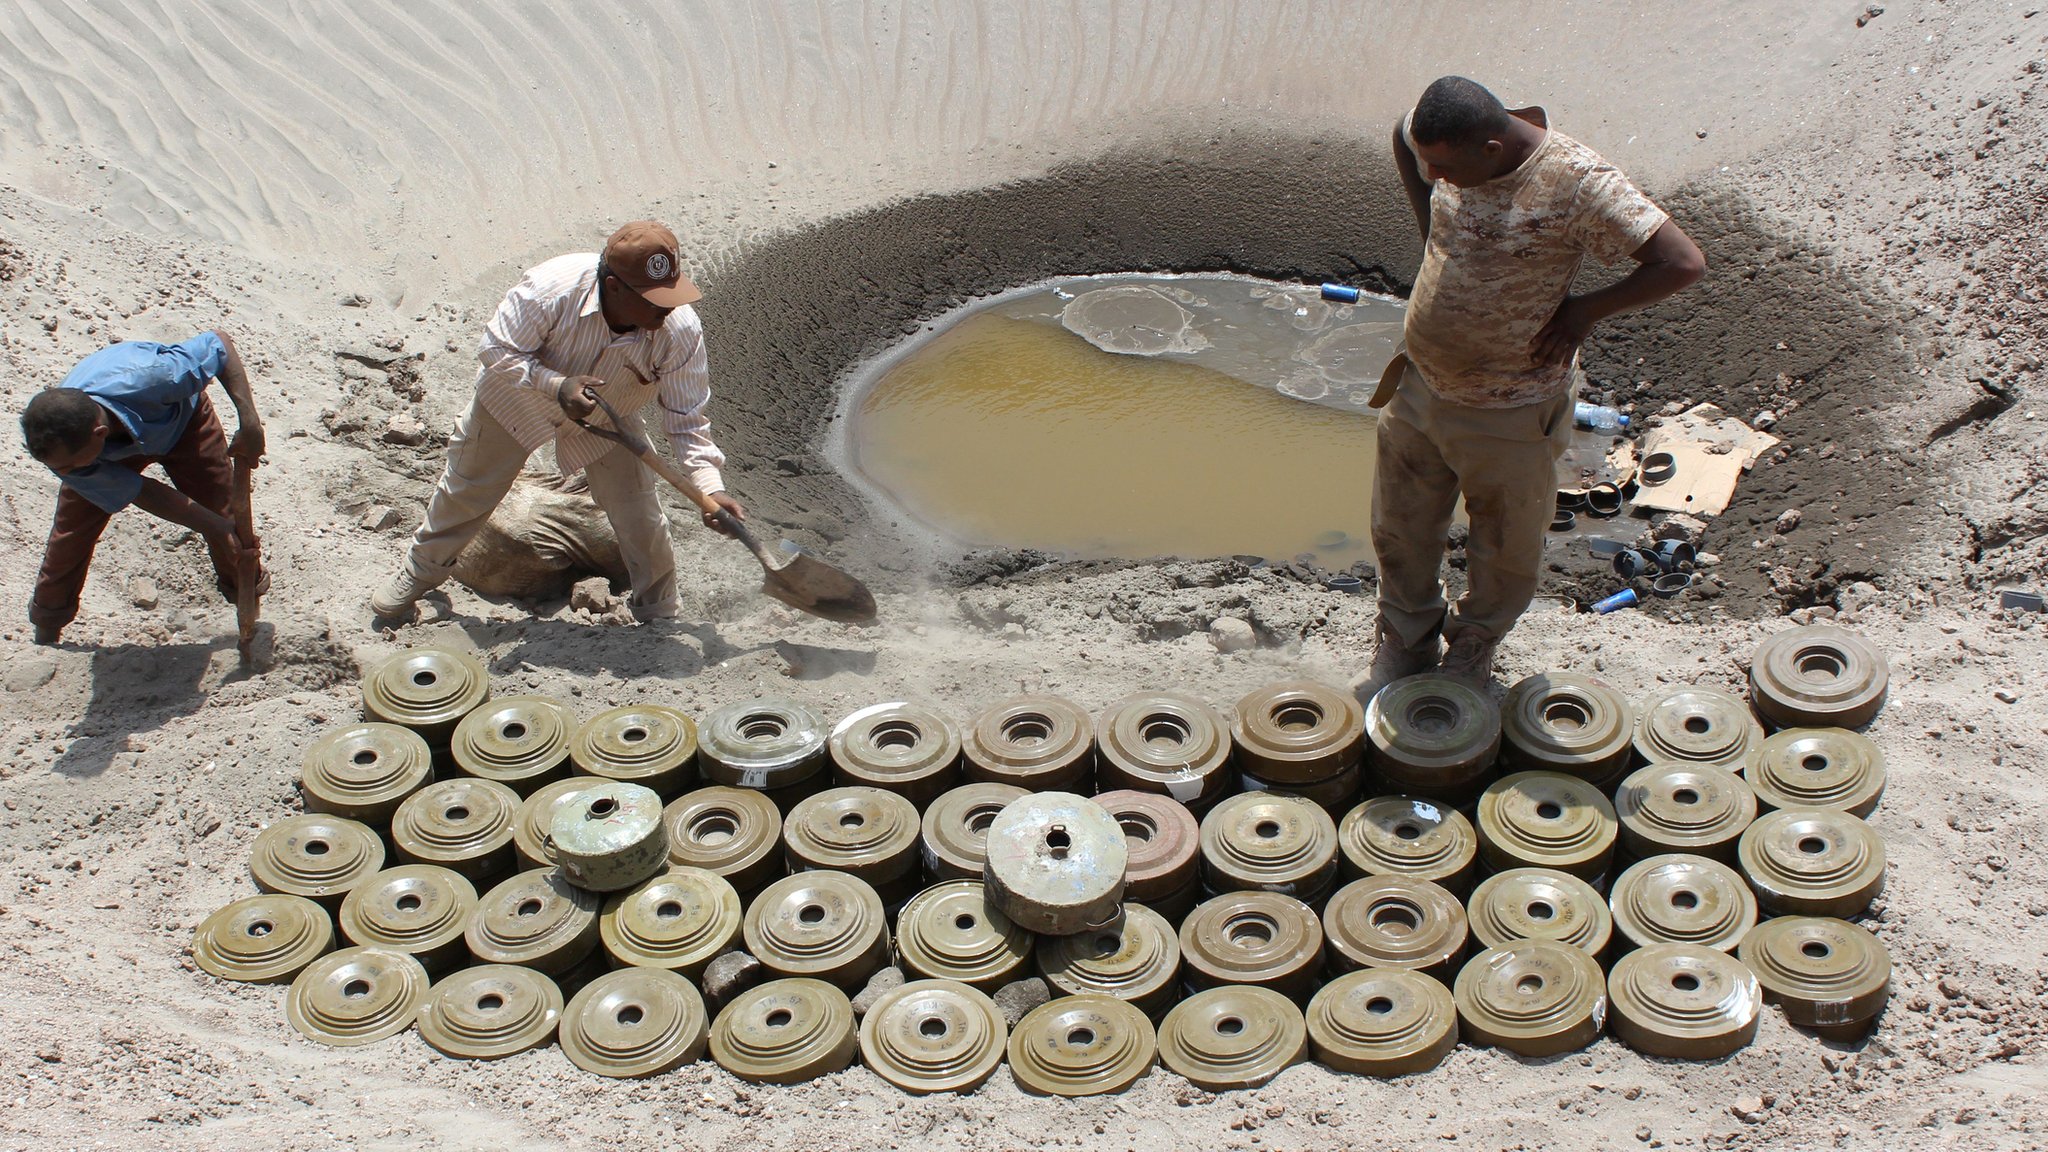 Landmine casualties at 10-year high - report - BBC News